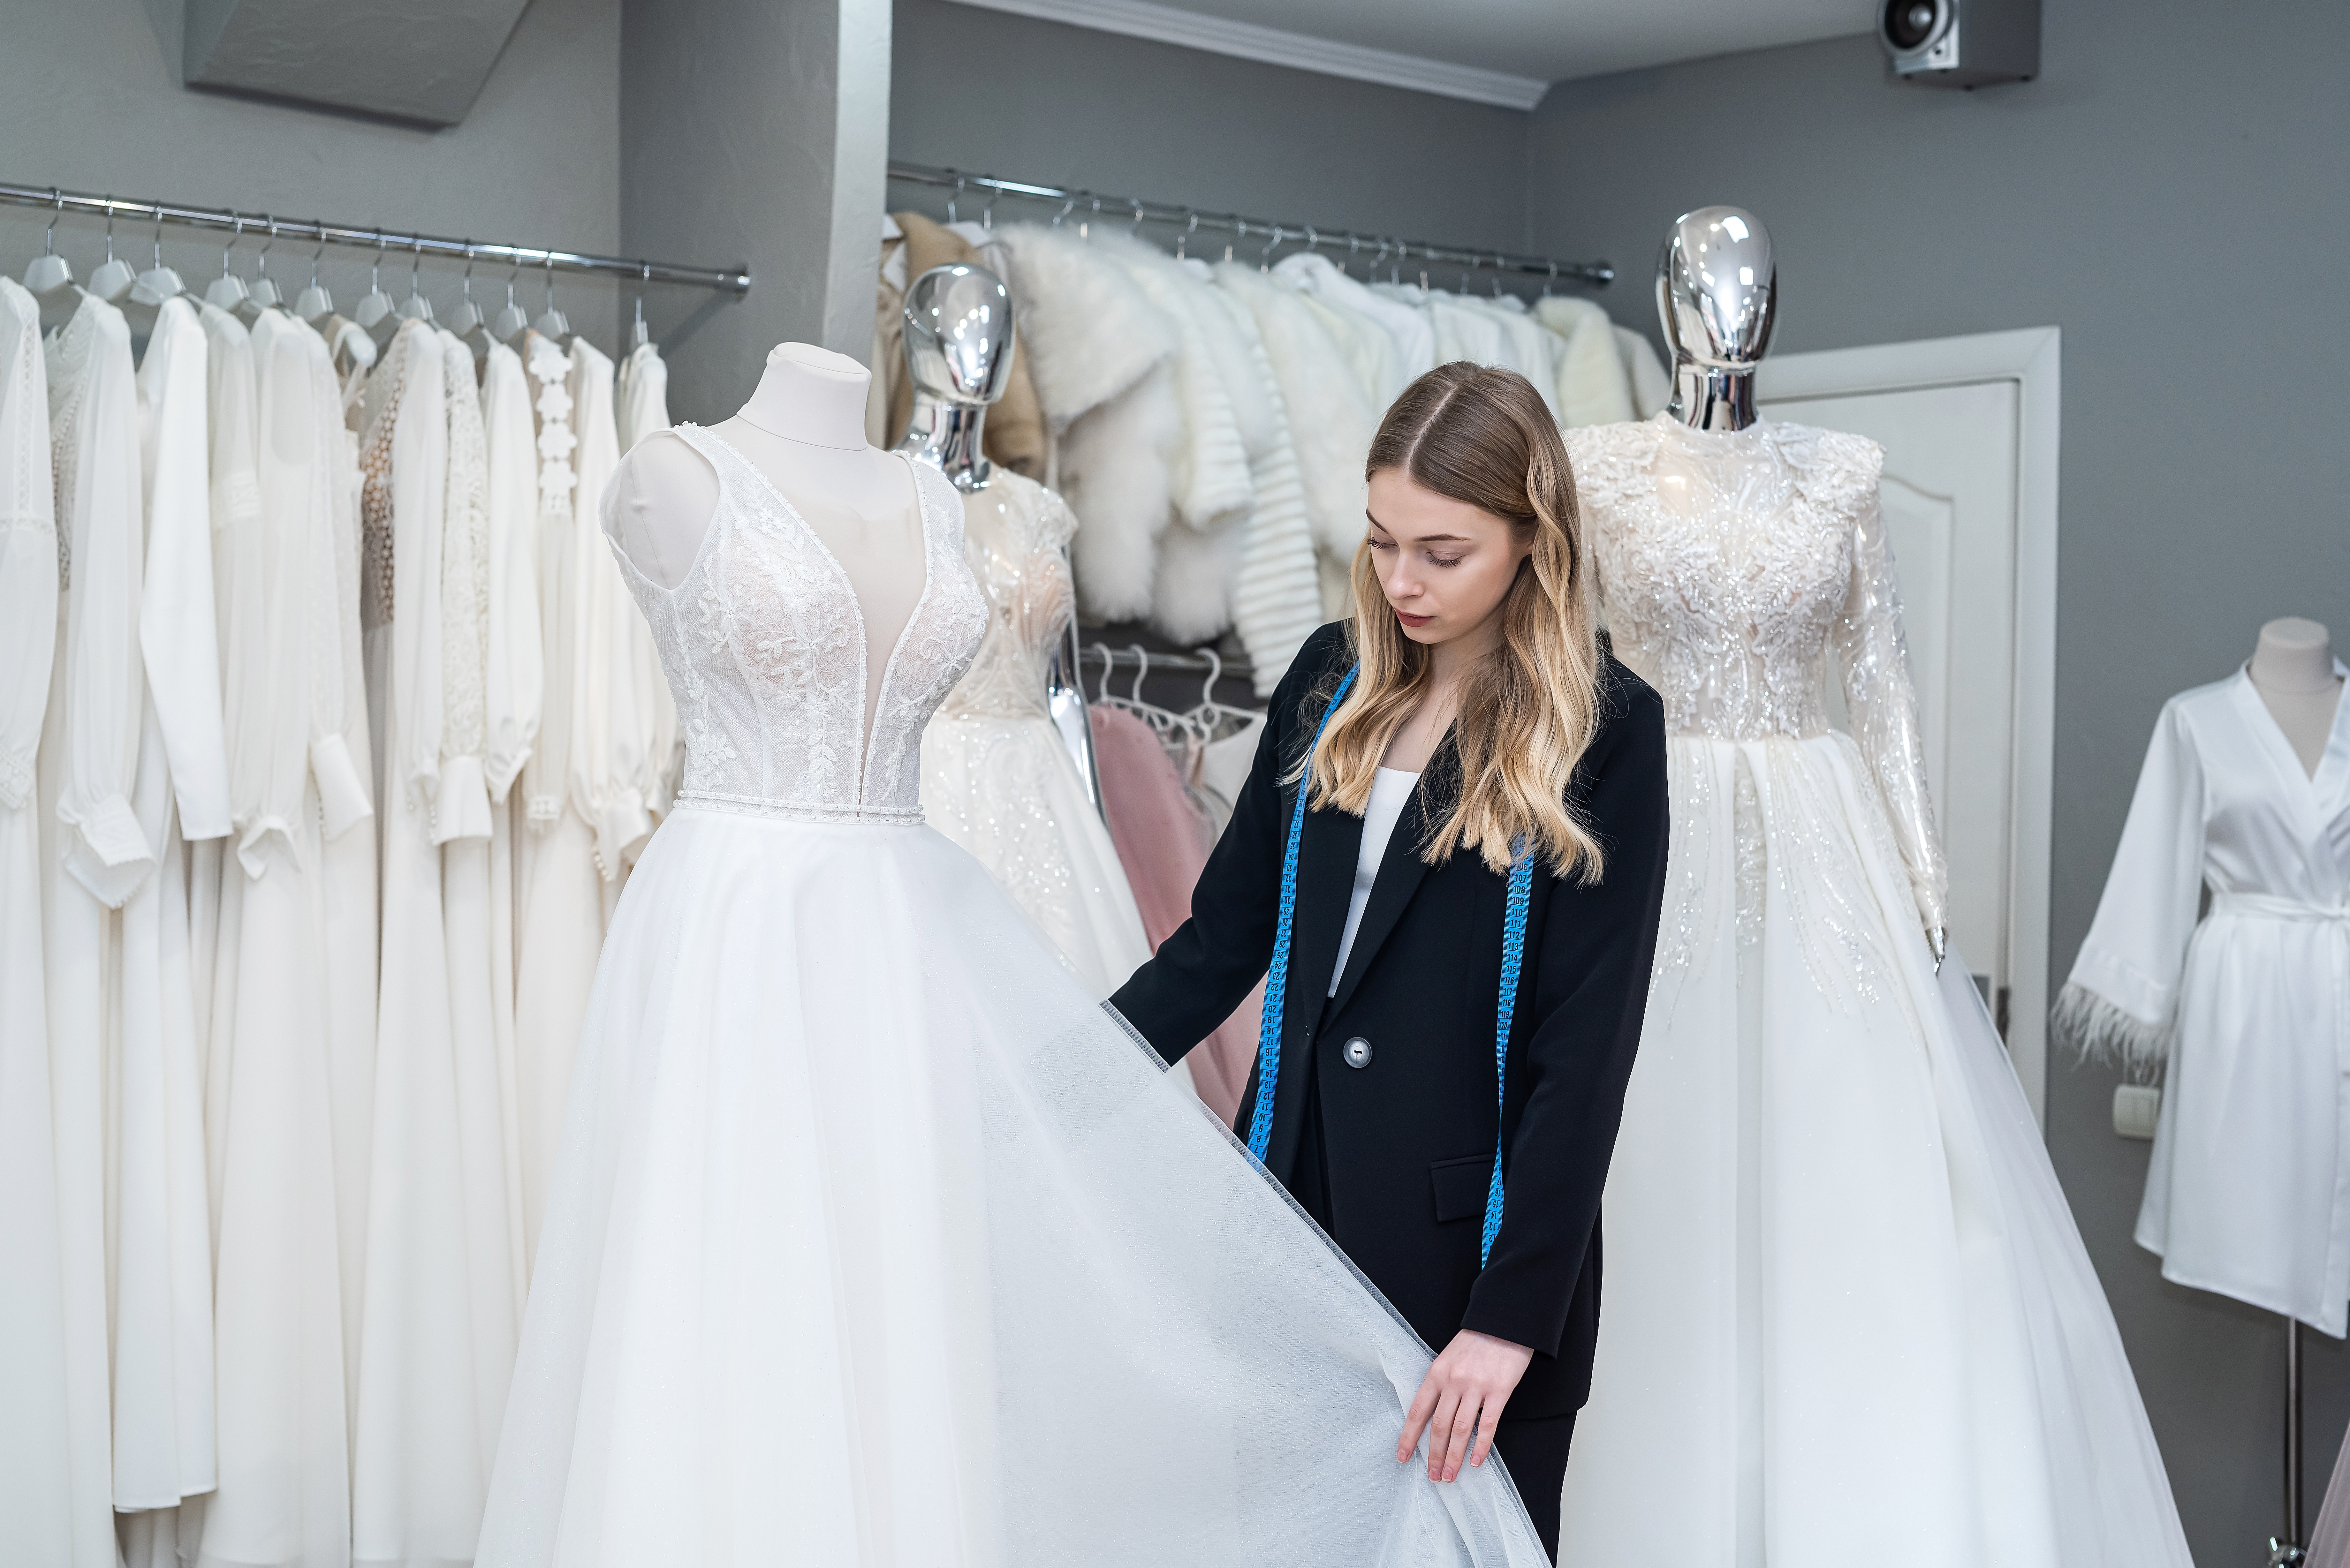 A designer taking measurements of a wedding dress | Source: Shutterstock